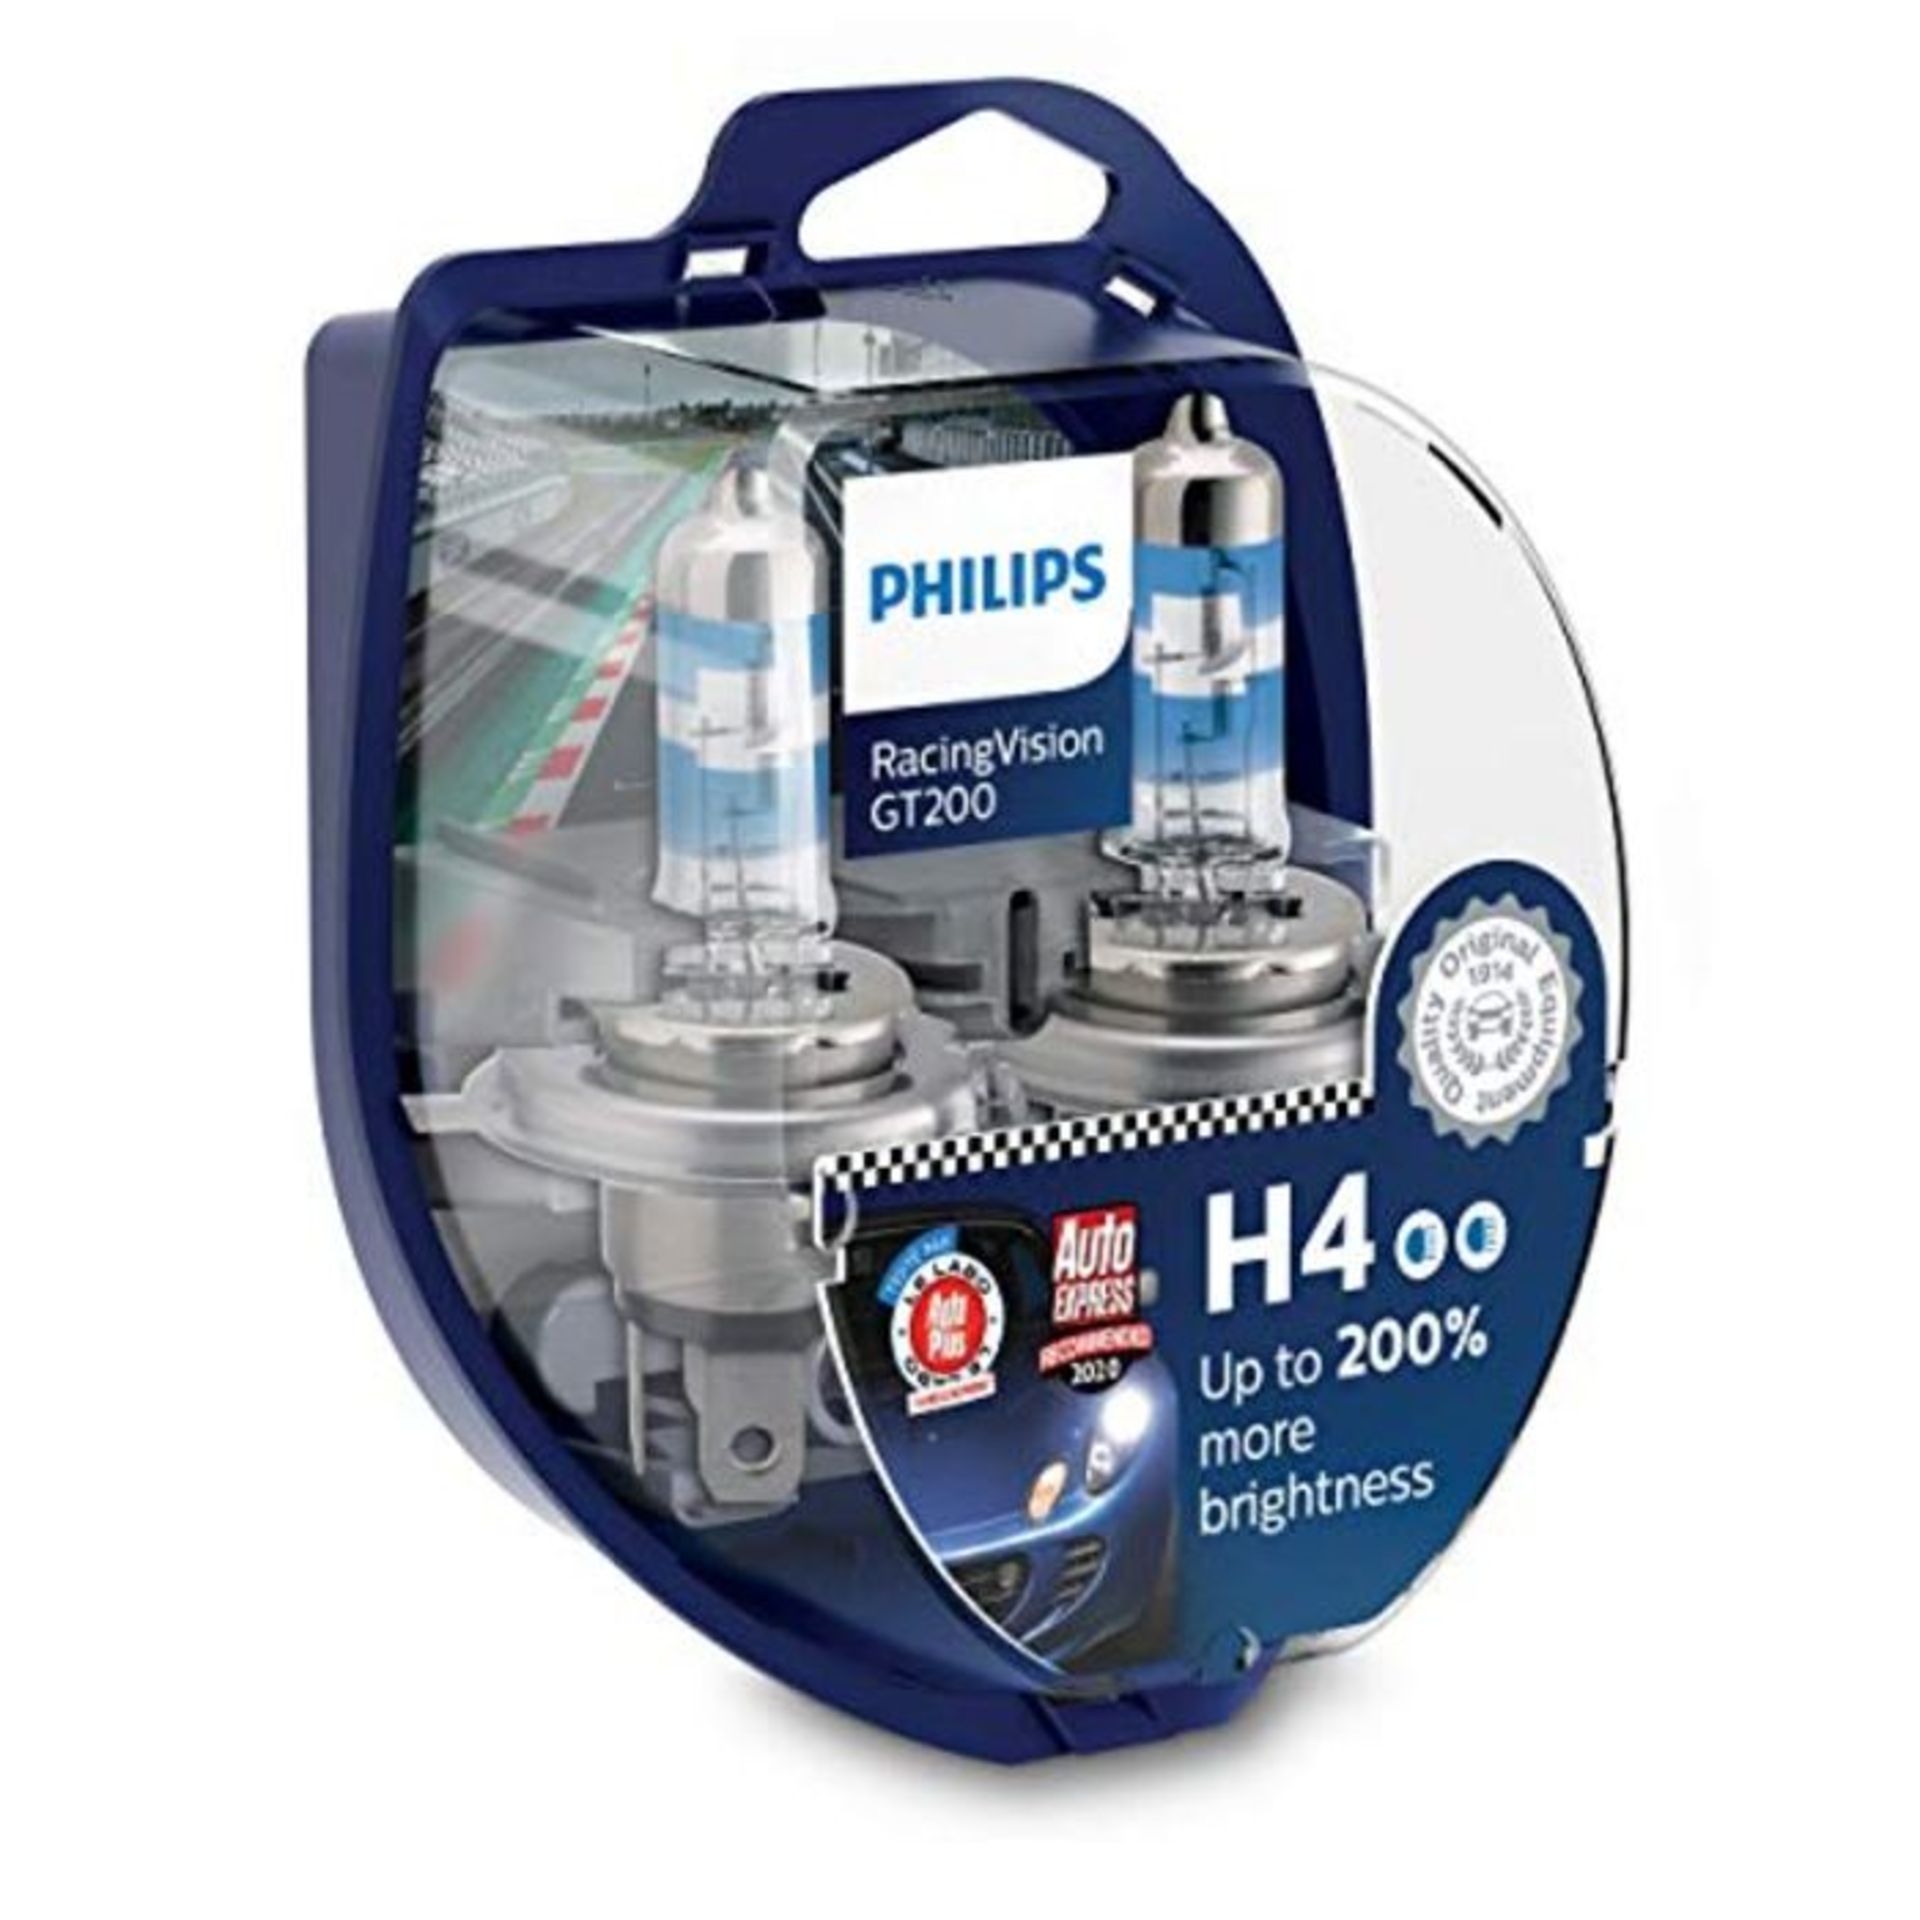 Philips 575528 RacingVision GT200 H4 car headlight bulb +200%, set of 2